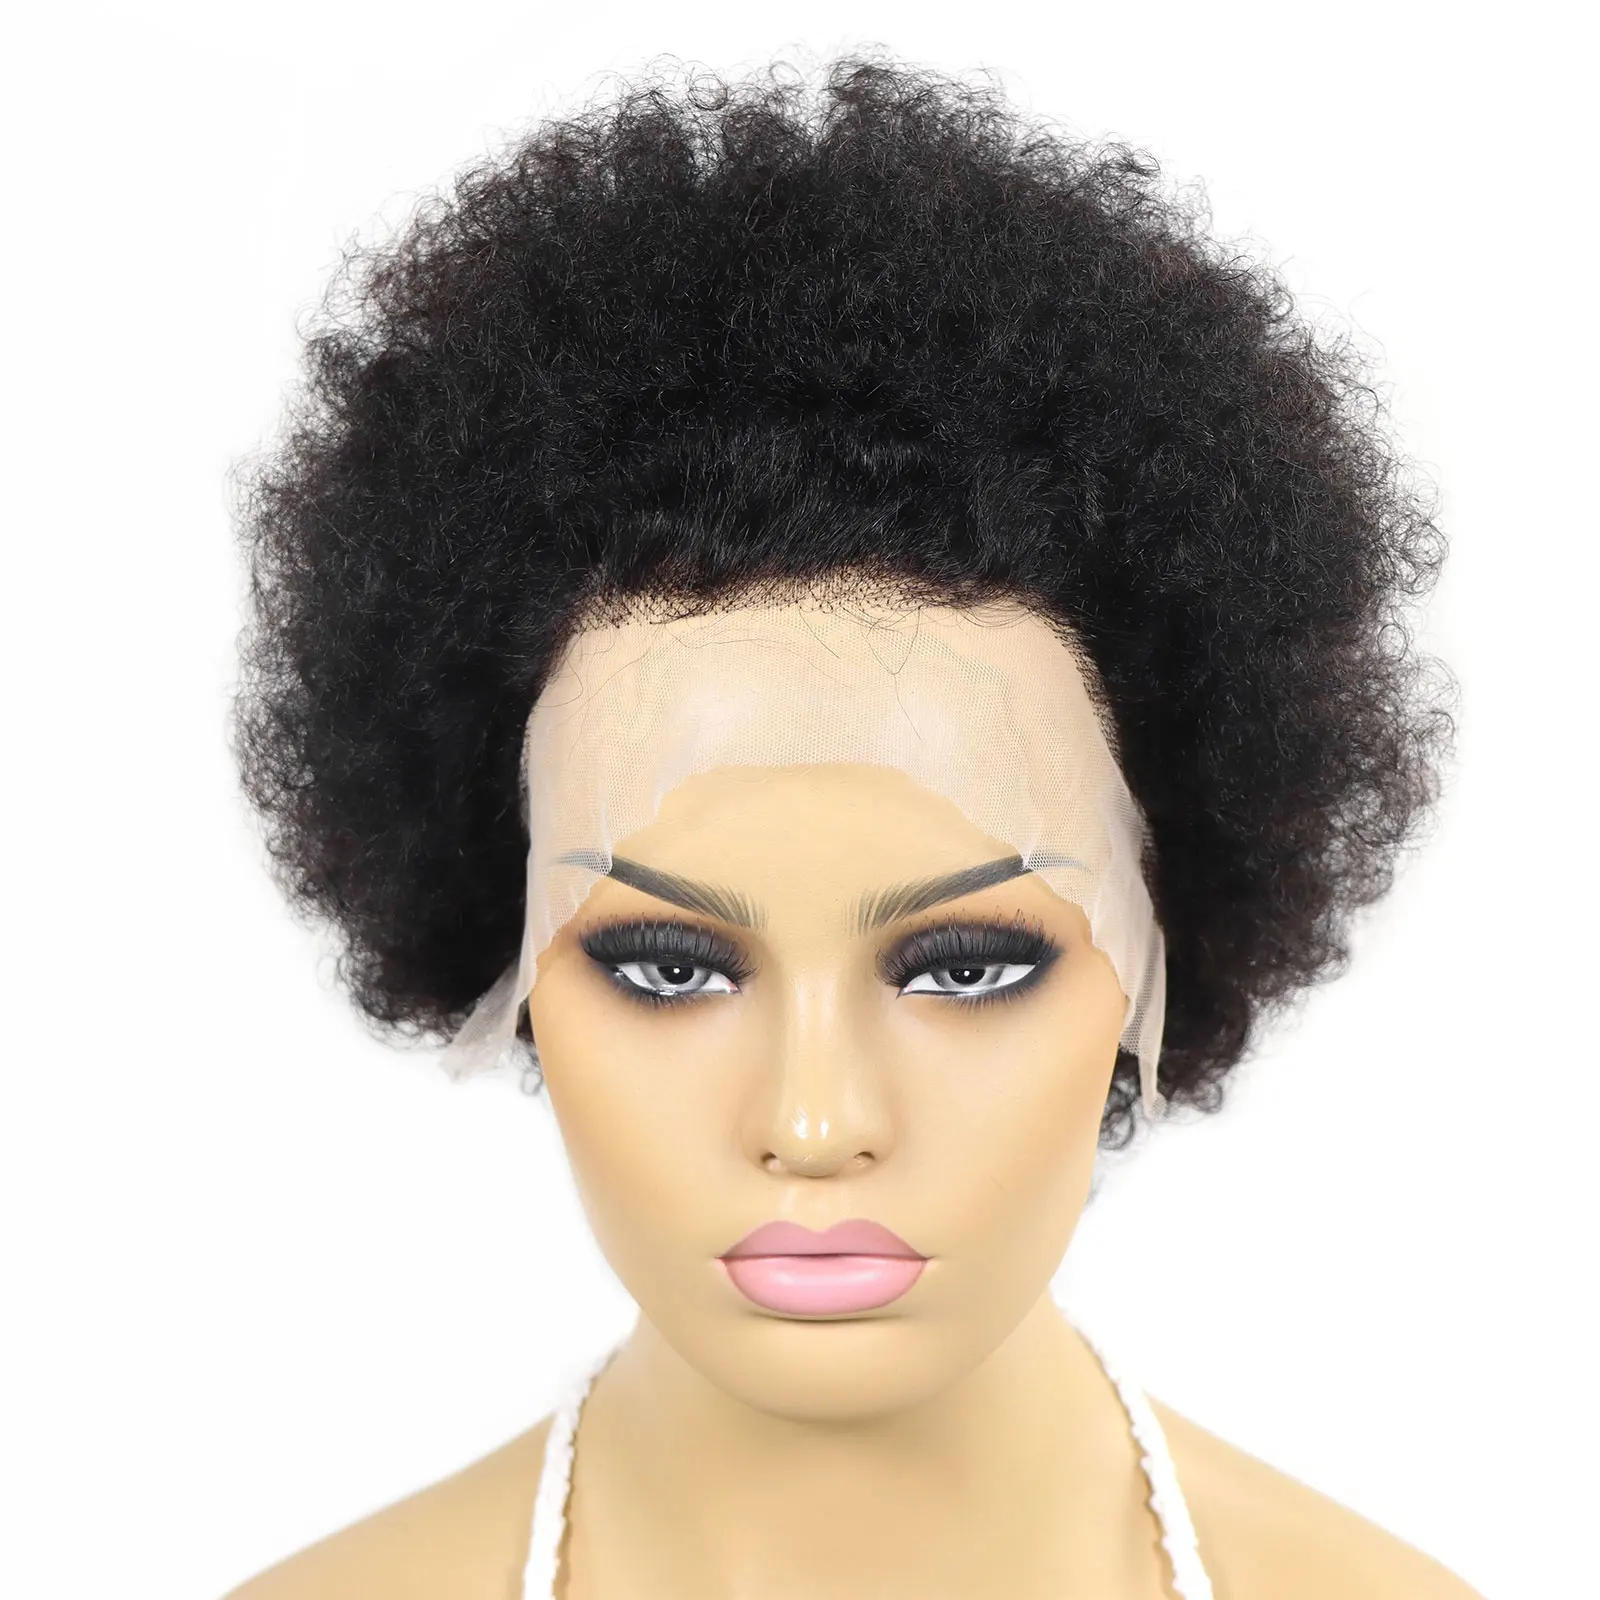 Peruca cabelo humano encaracolado afro curto, para mulheres negras 13x4 frontal em renda natural